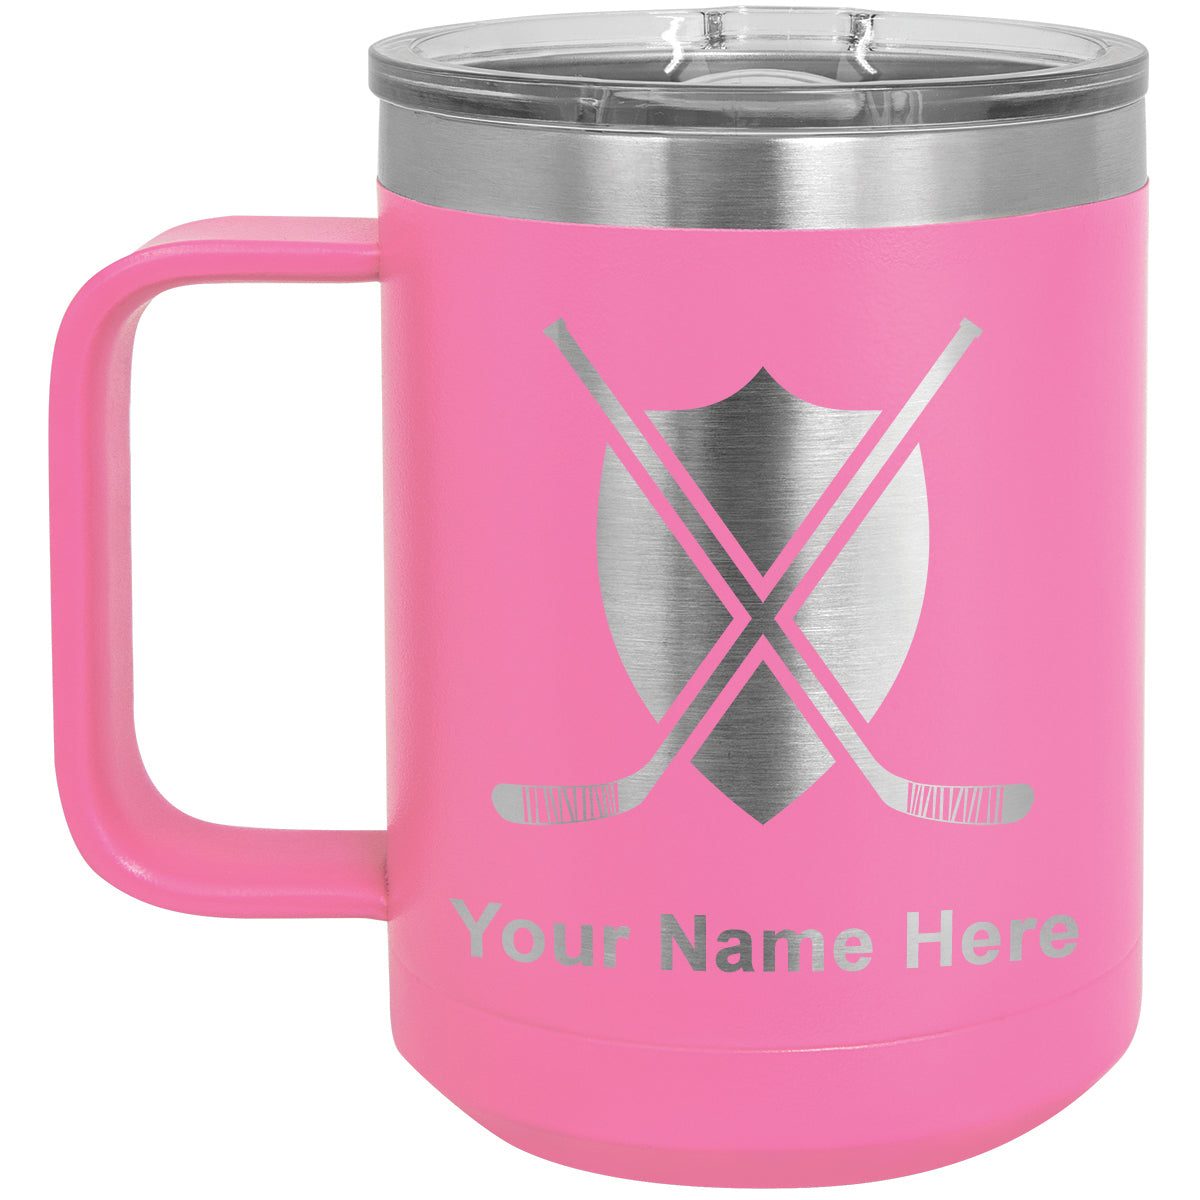 15oz Vacuum Insulated Coffee Mug, Hockey Sticks, Personalized Engraving Included